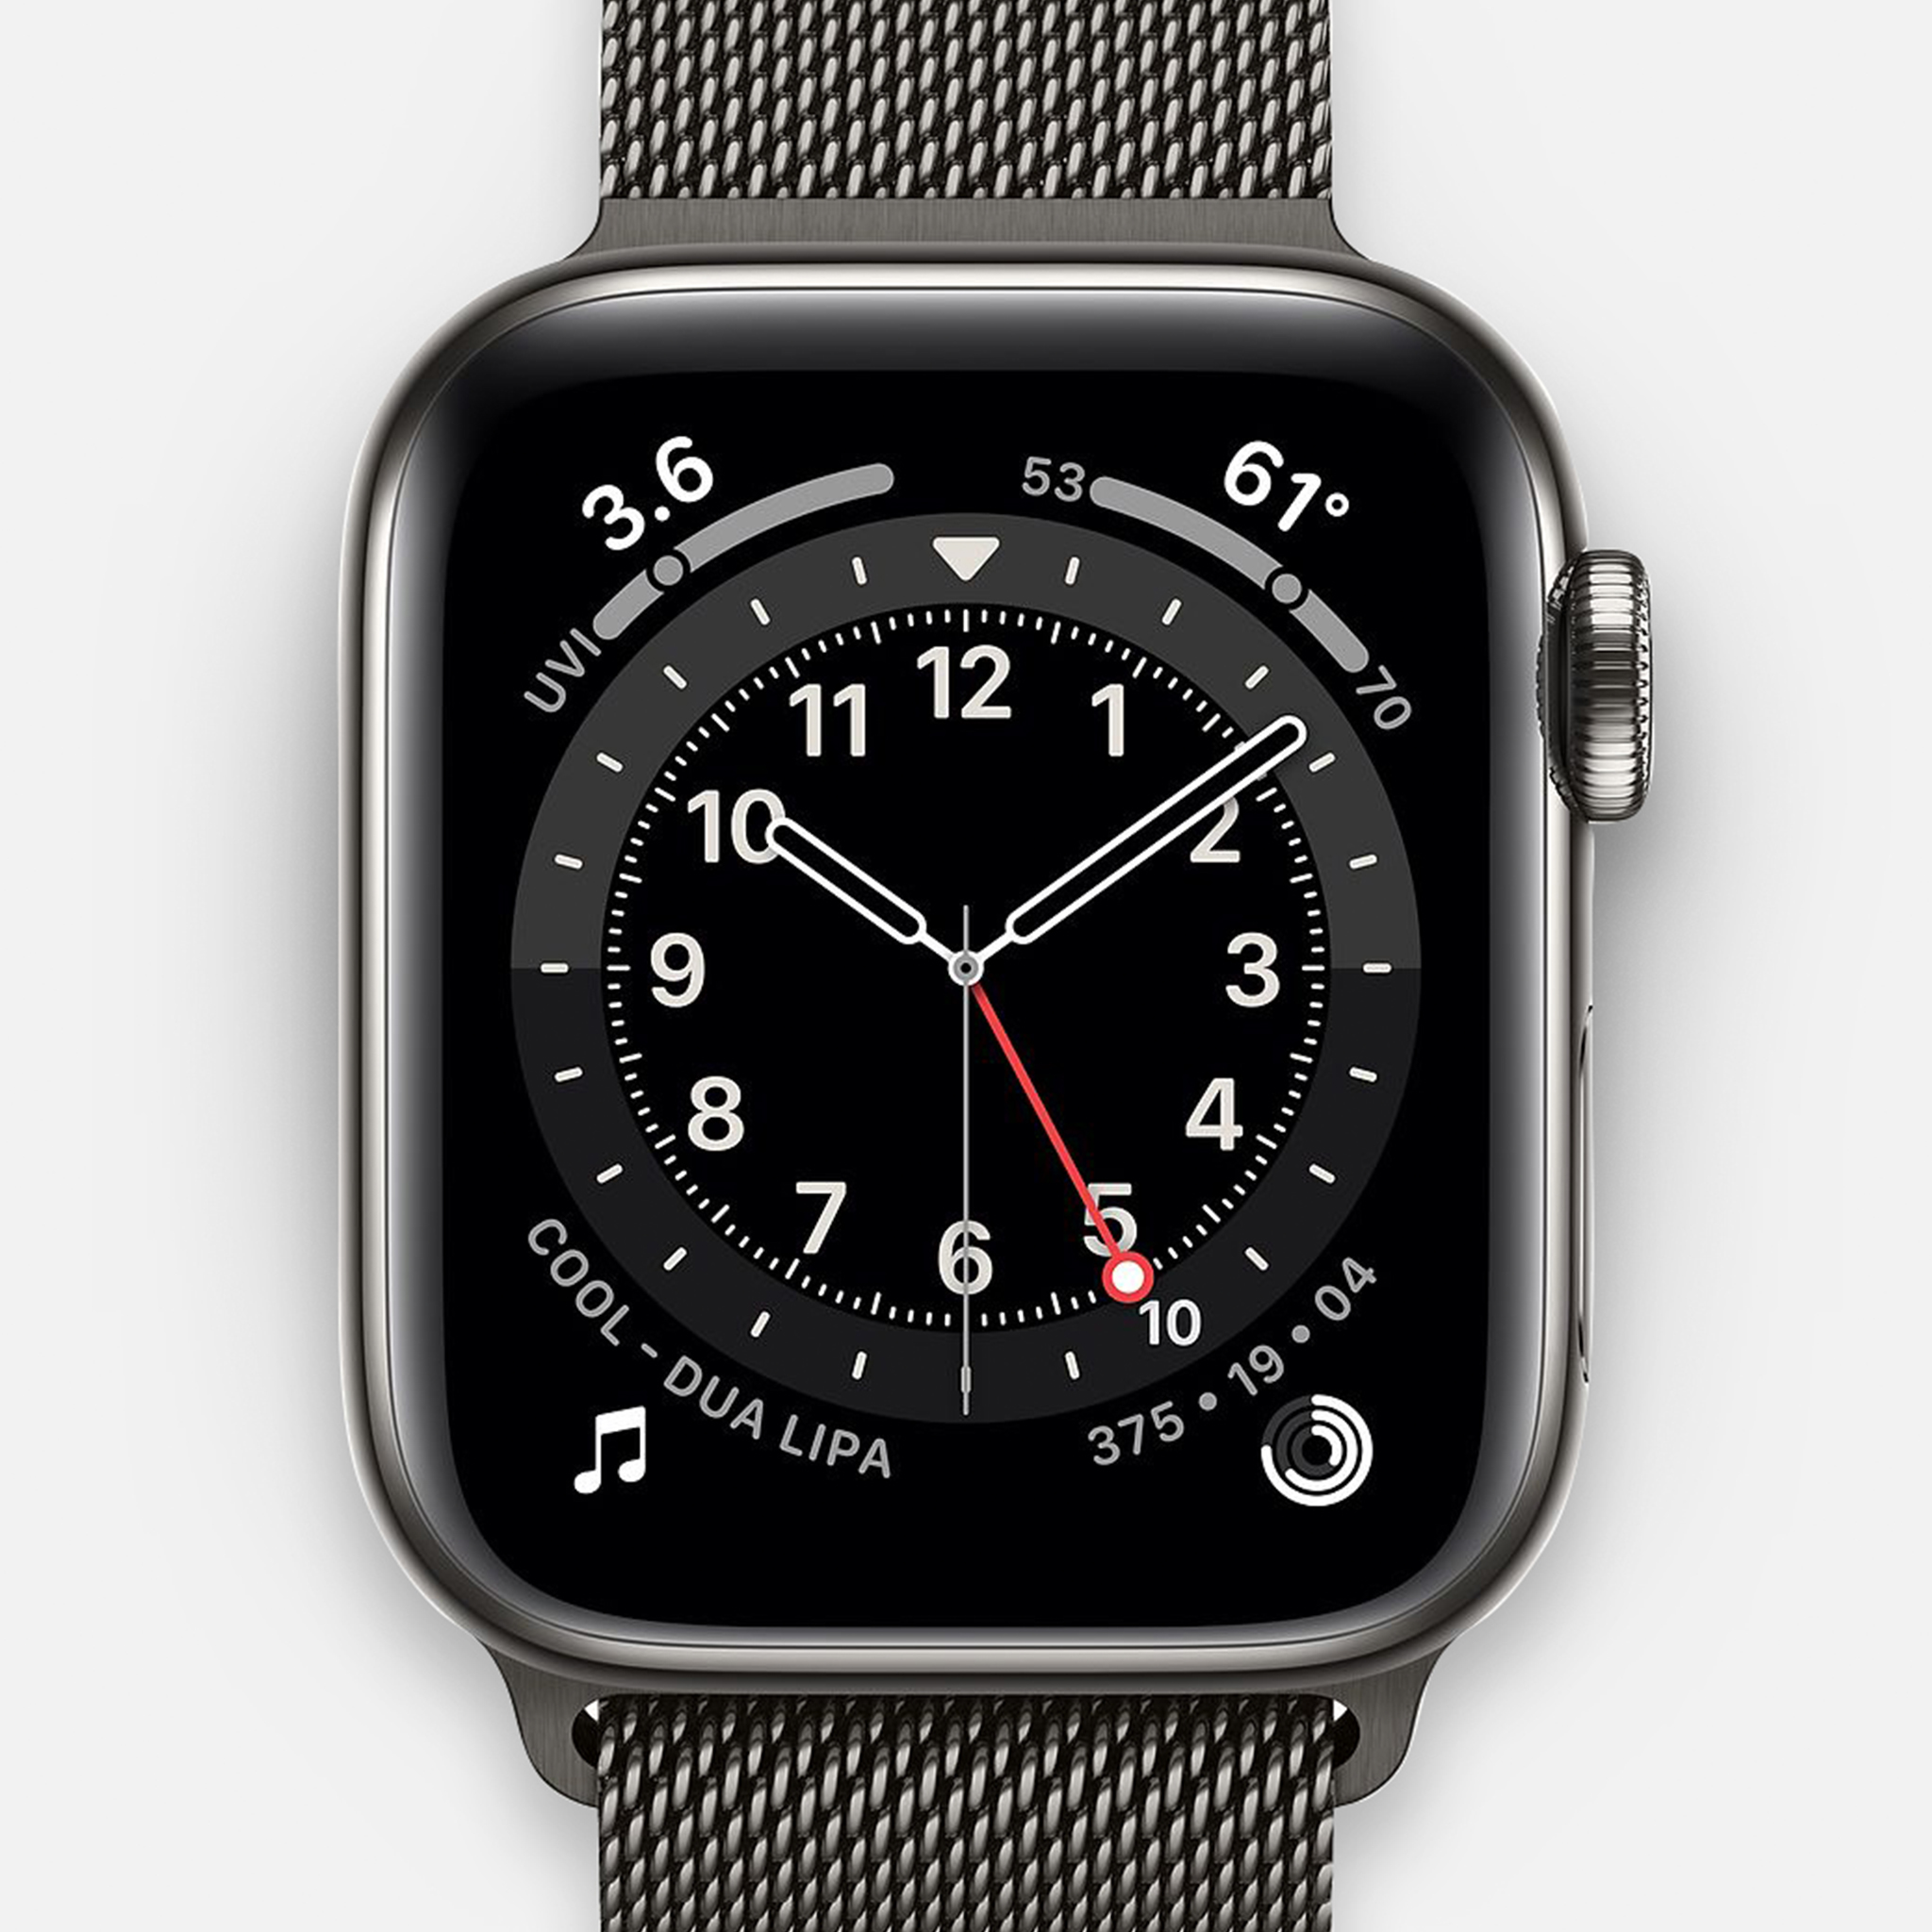 apple watch series 4 40mm stainless steel